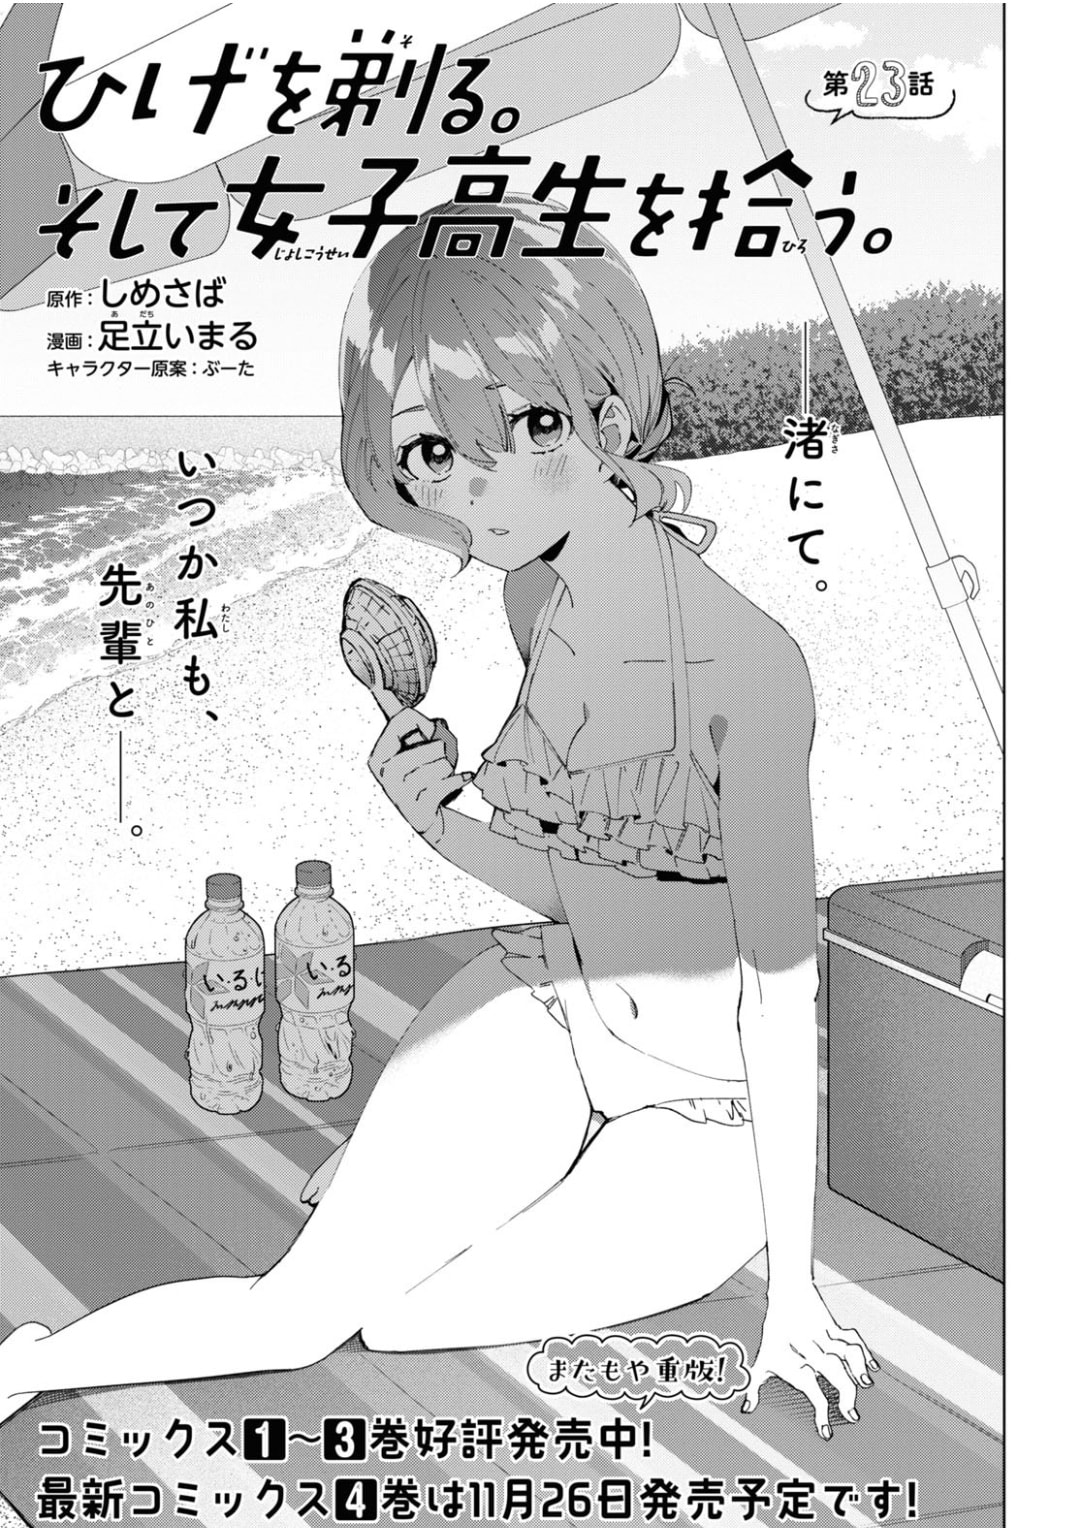 Chapter 23 (Manga) | Higehiro Wiki | Fandom